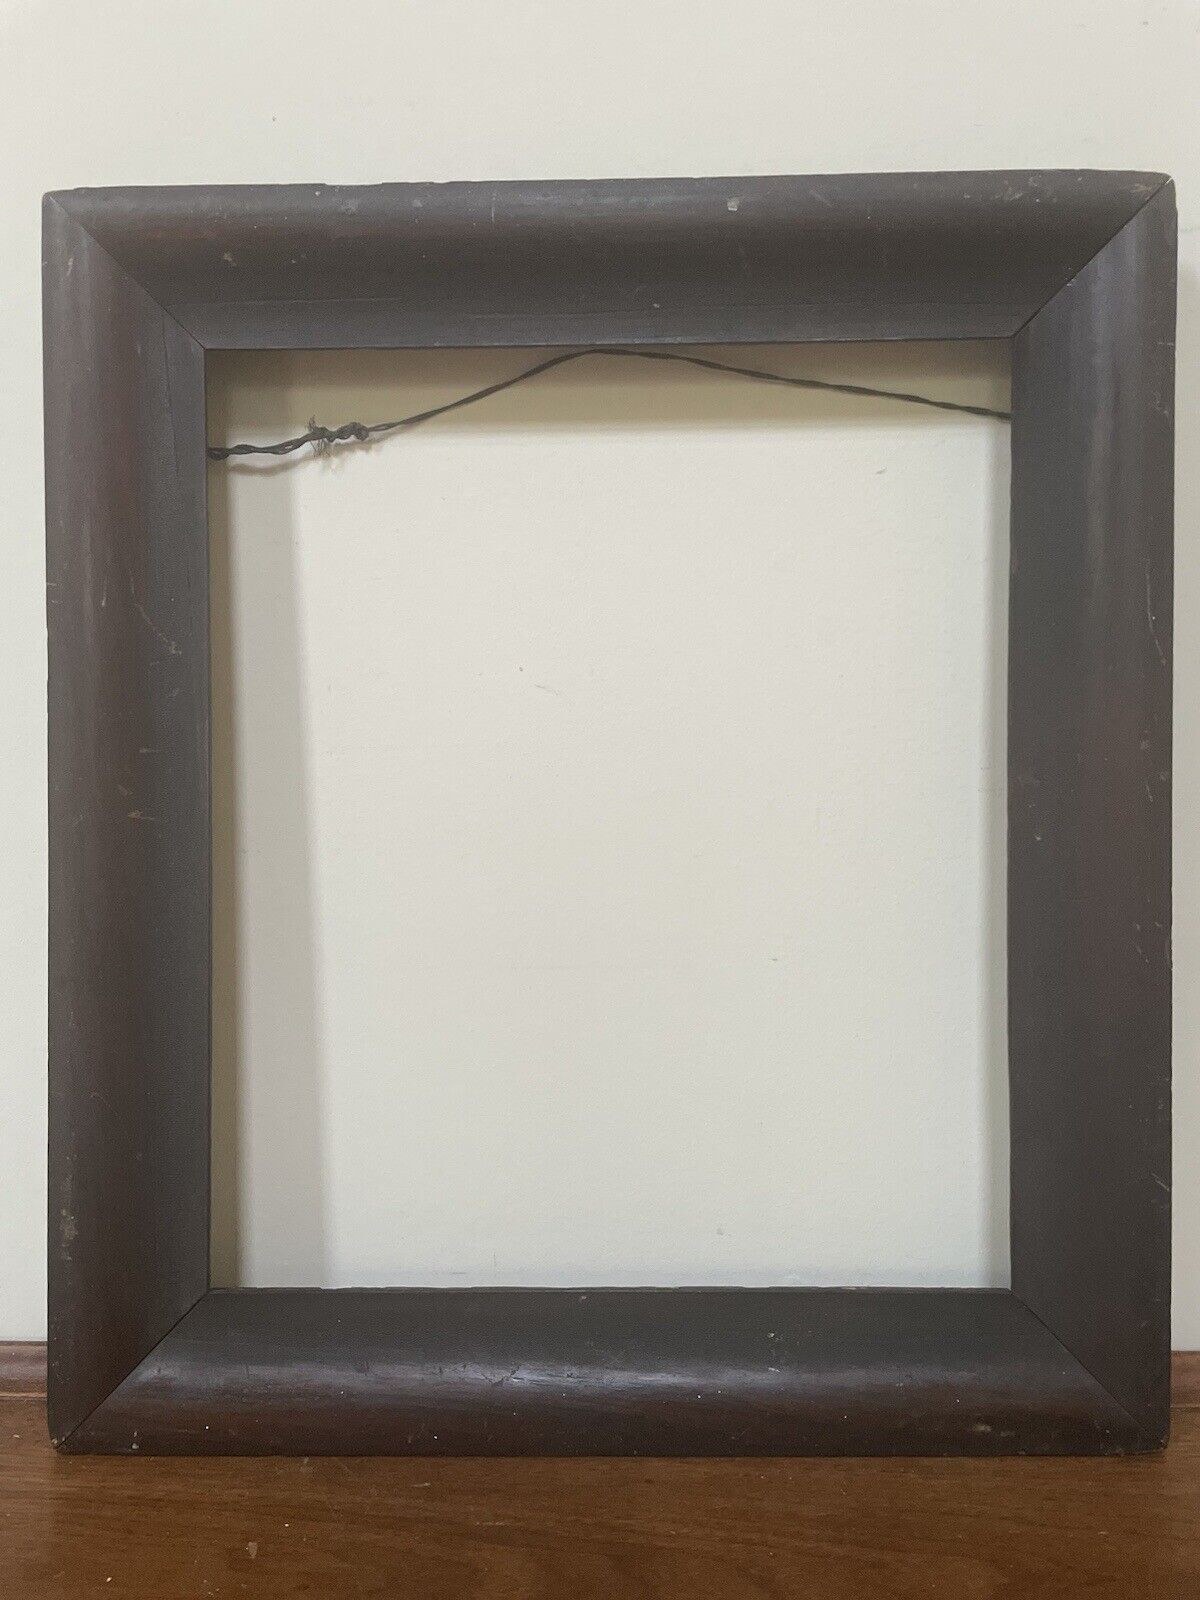 Antique Primitive Large Solid Dark Brown Wooden Art Frame 20x17.75x1.75”/16”x13”